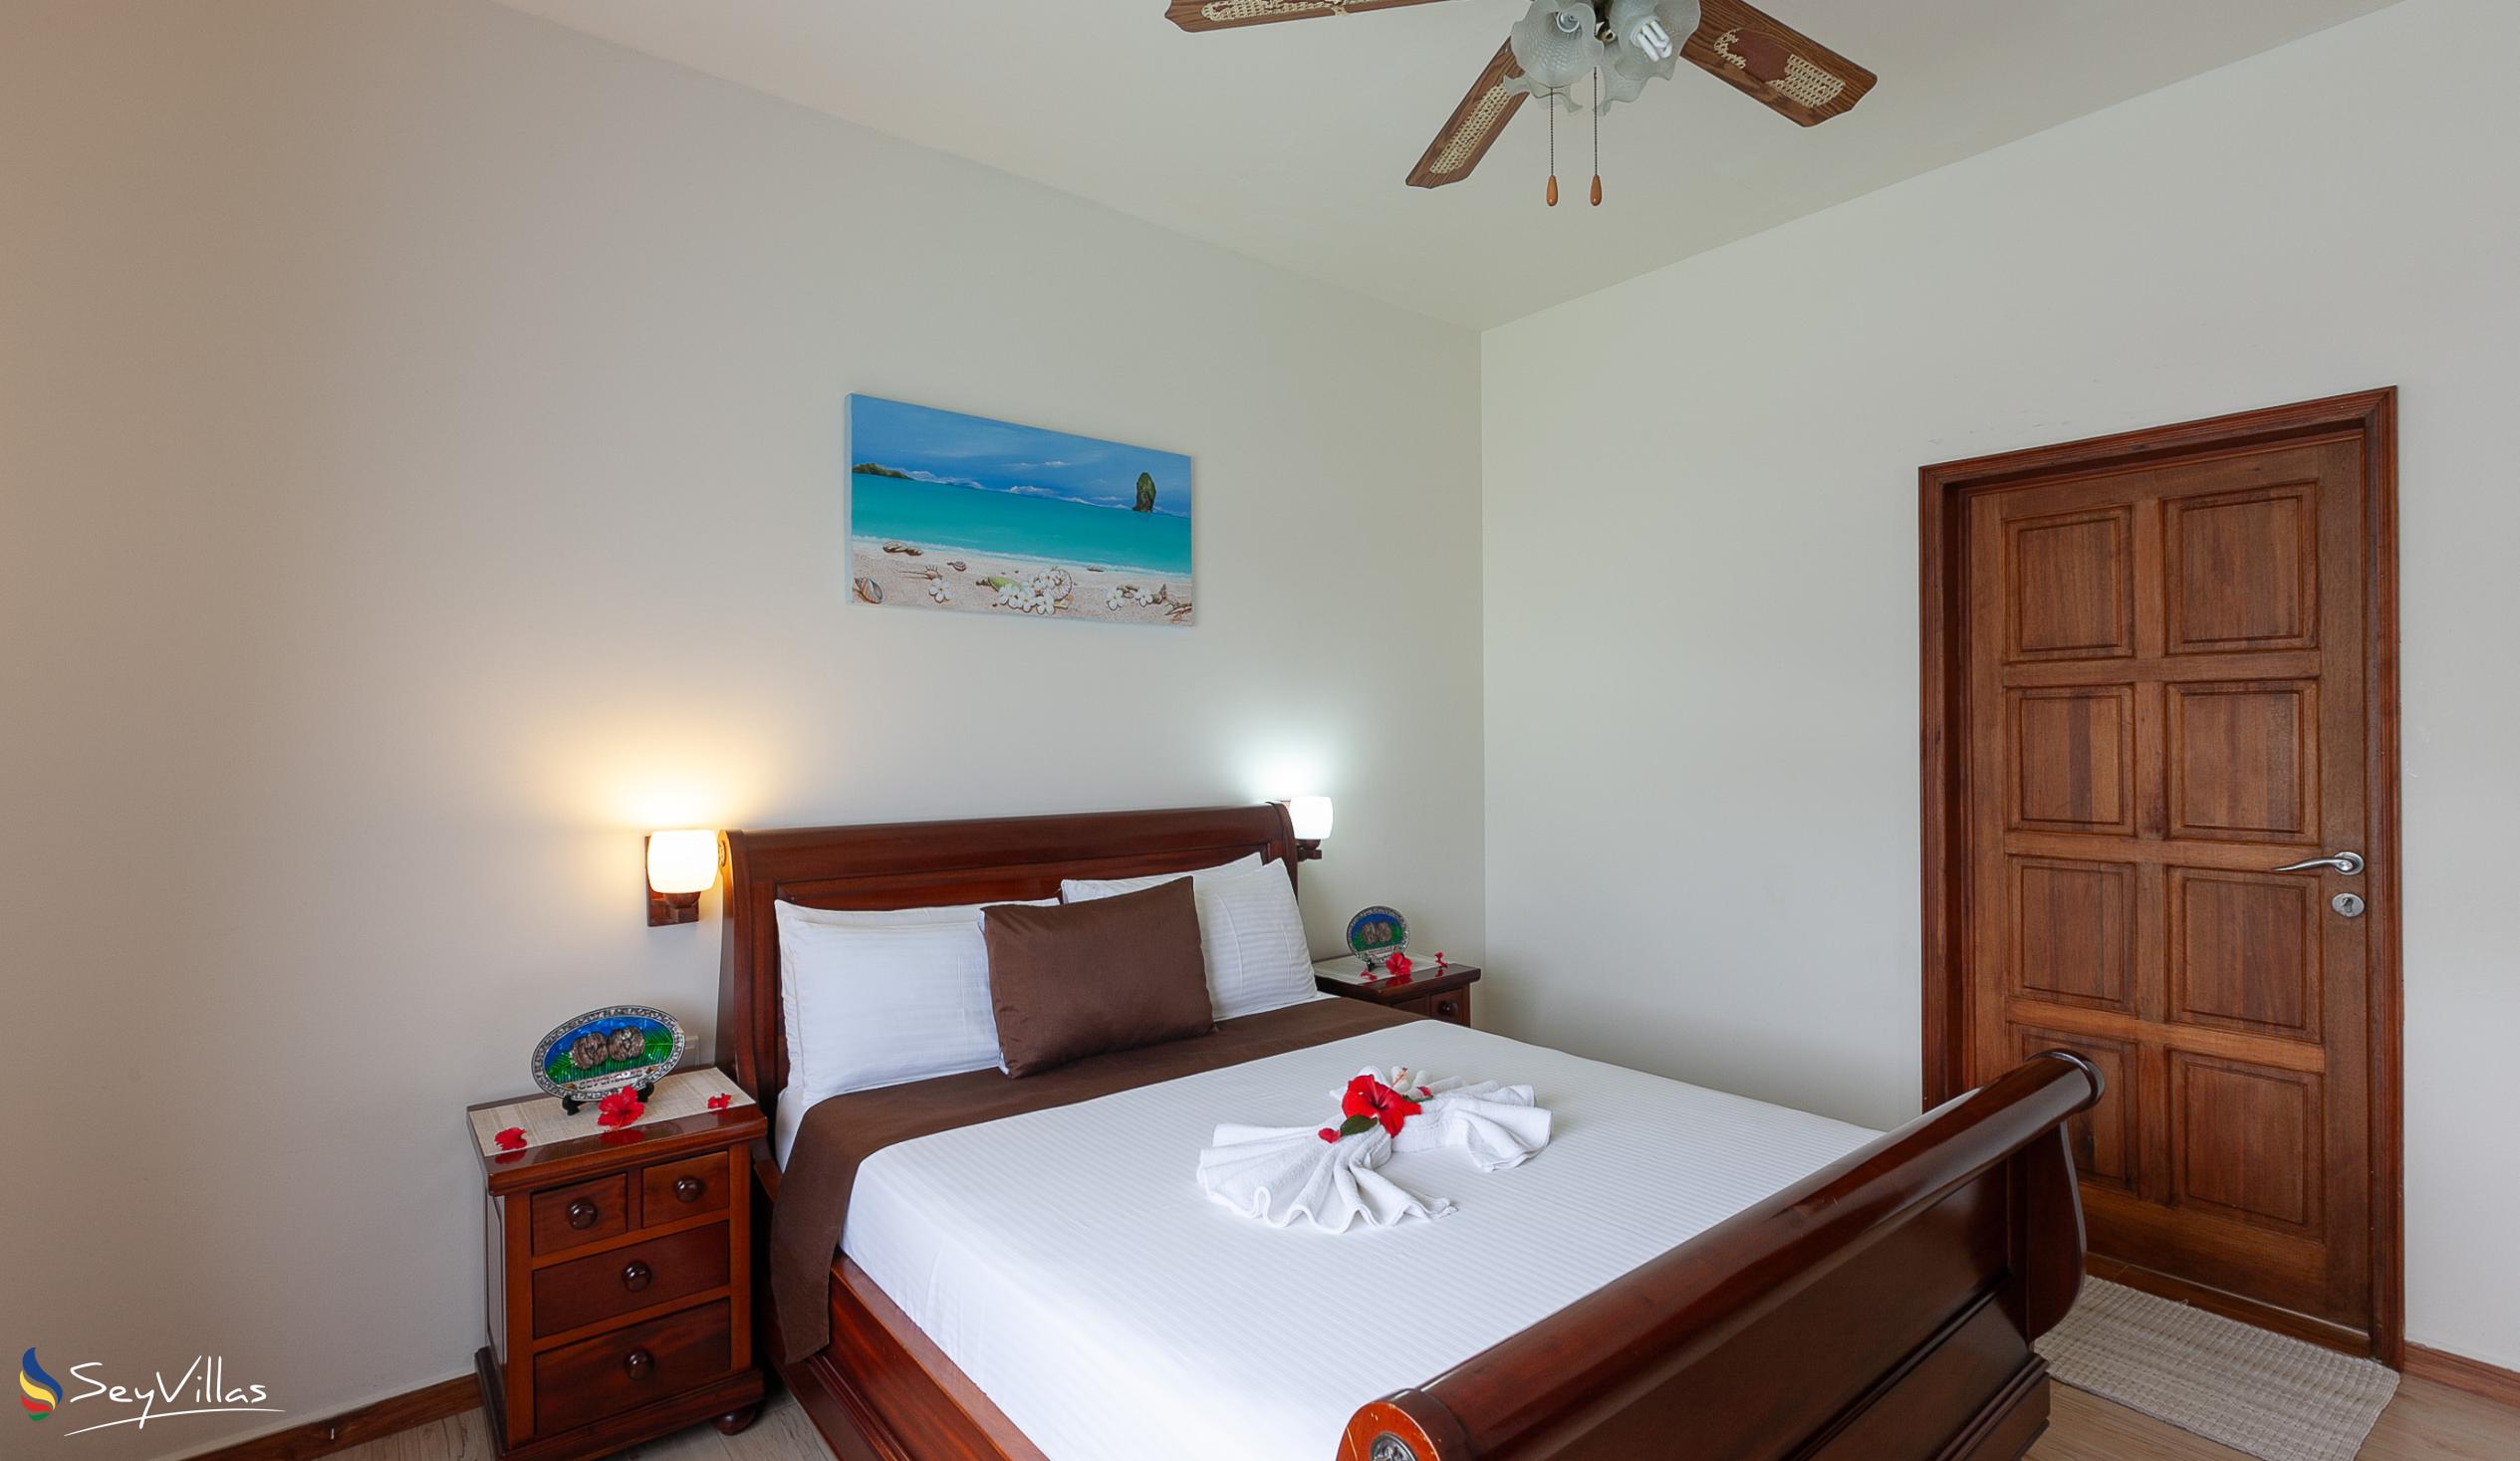 Foto 71: Seashell Beach Villa - Appartement 2 chambres - Praslin (Seychelles)